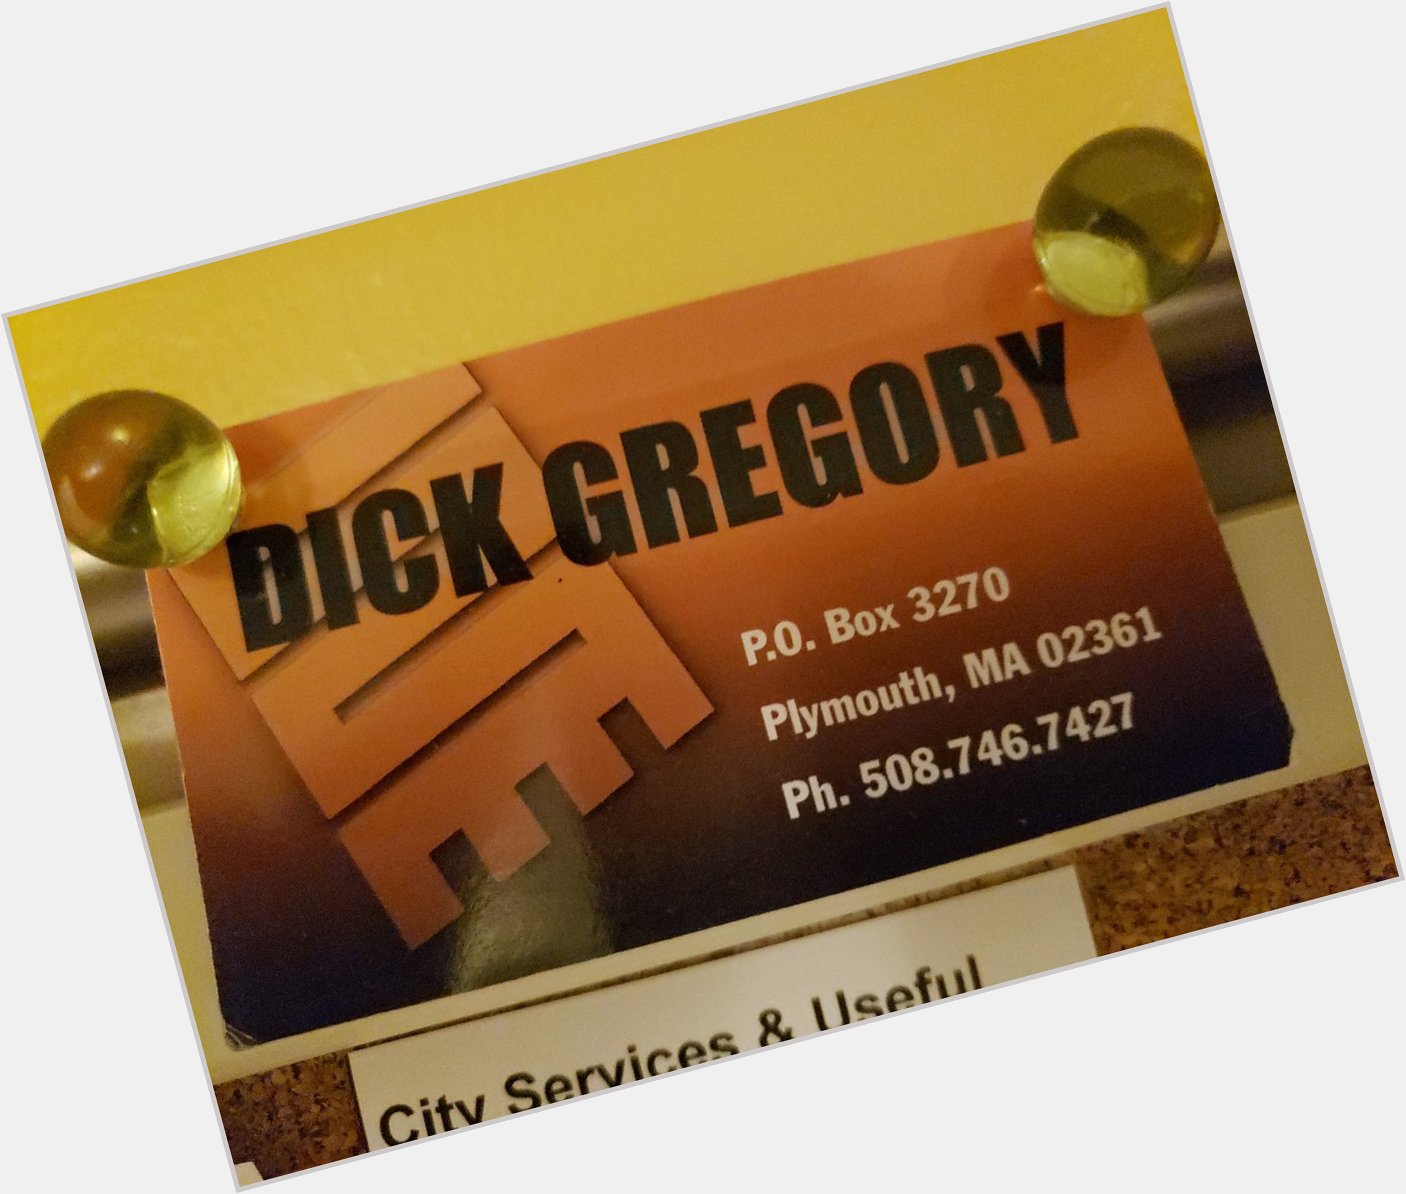  Happy birthday Mr Dick Gregory. 